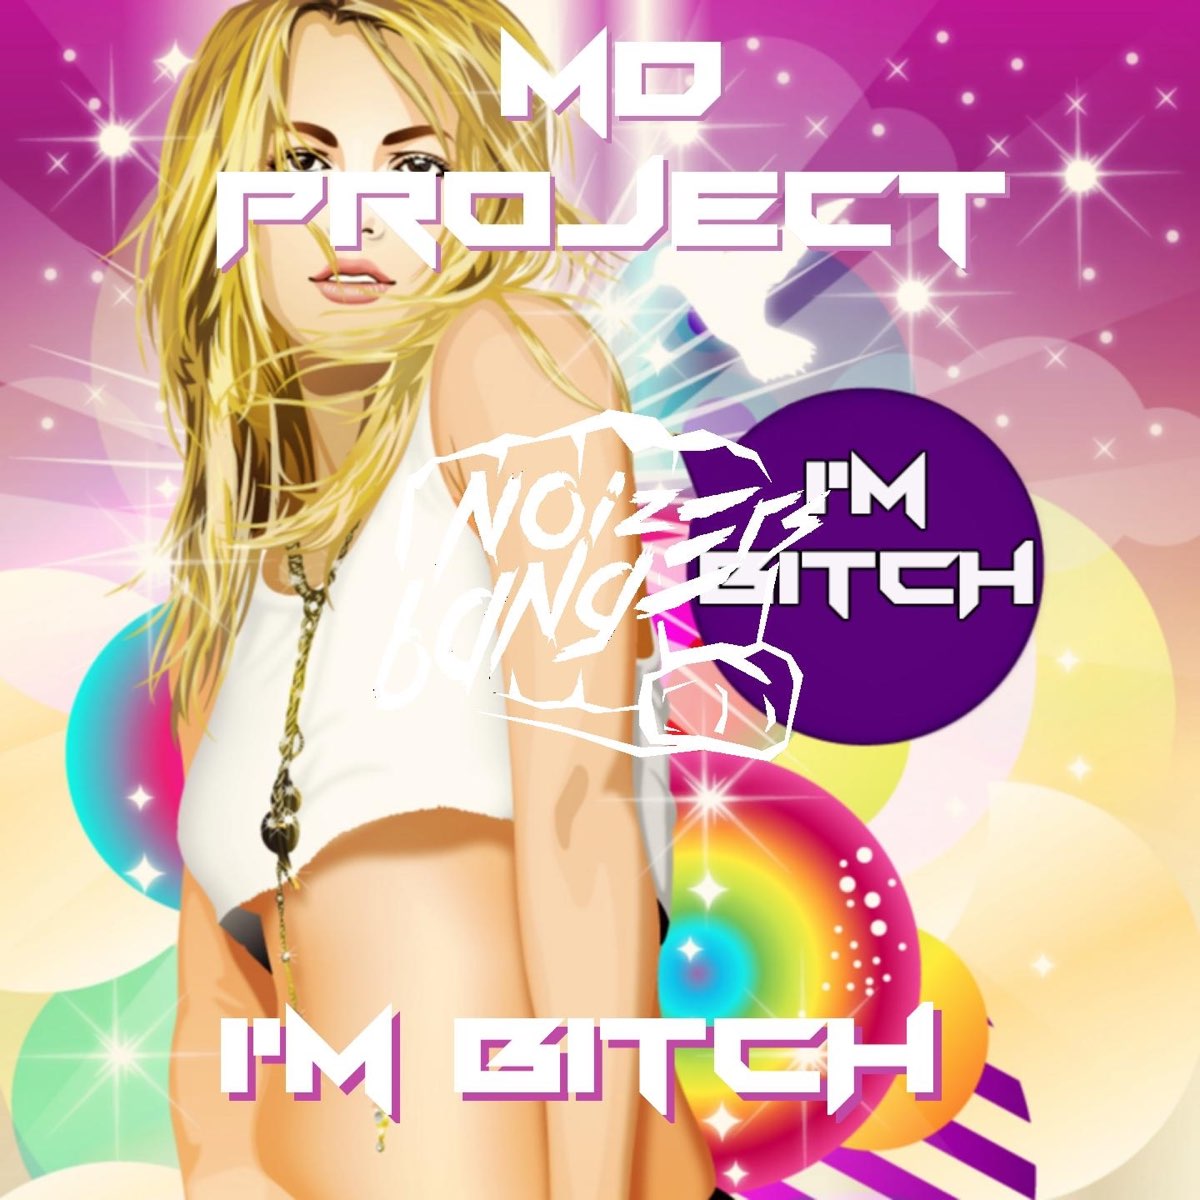 M.D. Project. M.D.Project - Italo Disco Fantasy обложка. Мальчишник ночь ремикс 2021. Песня m.d. Project. M d project мальчишник disco fantasy